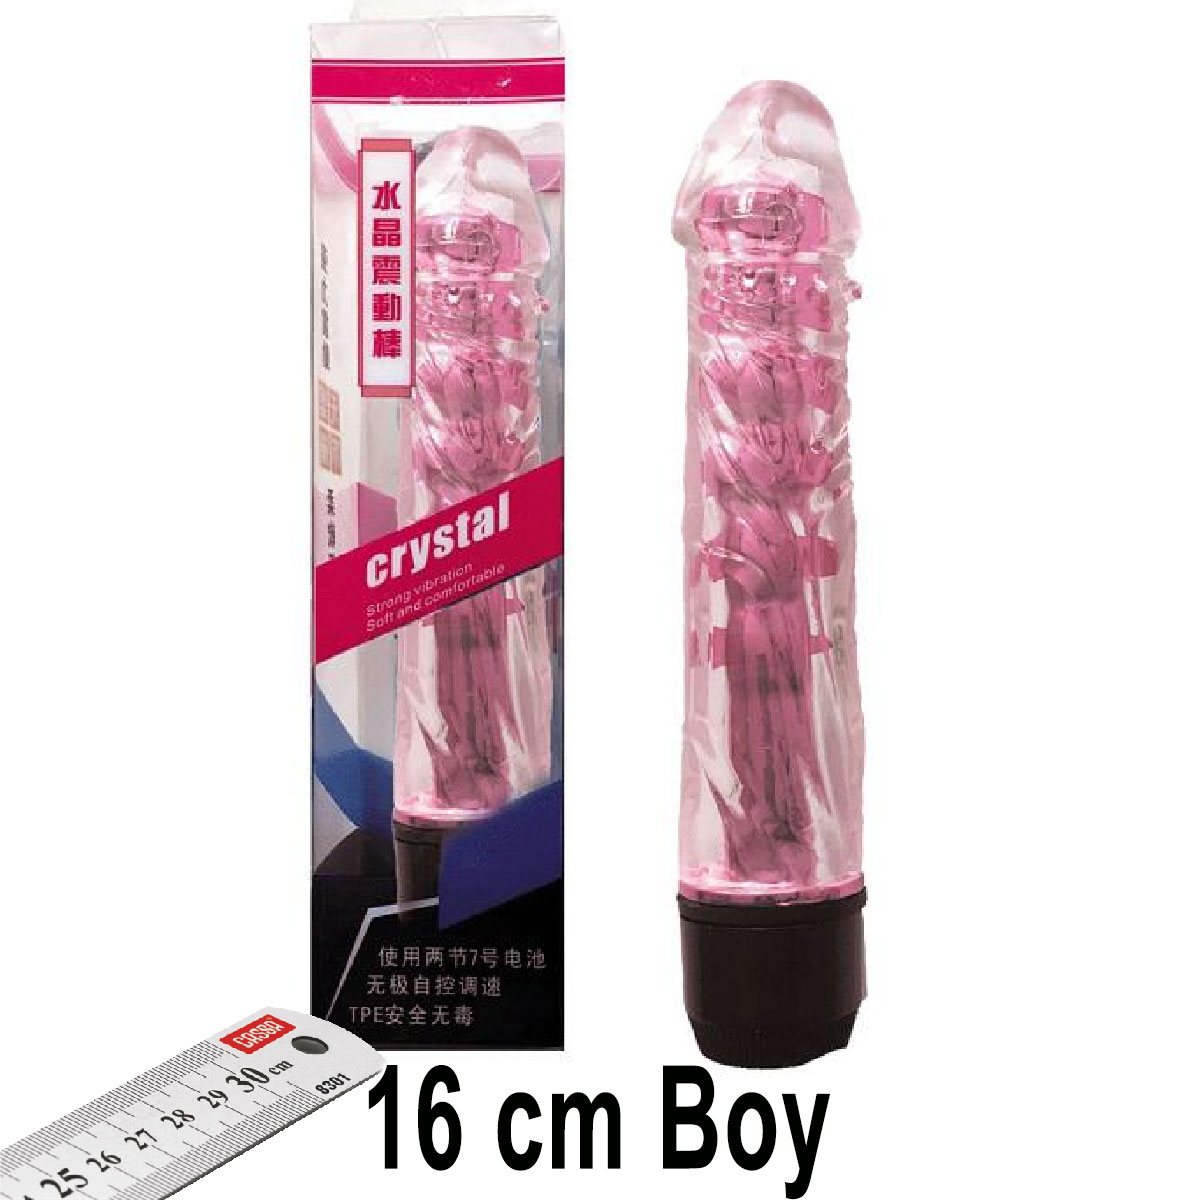 Crystal 16 cm Boy Pembe Renk Vibratr ve Zevk Kilifi Seti AL-Q028-3